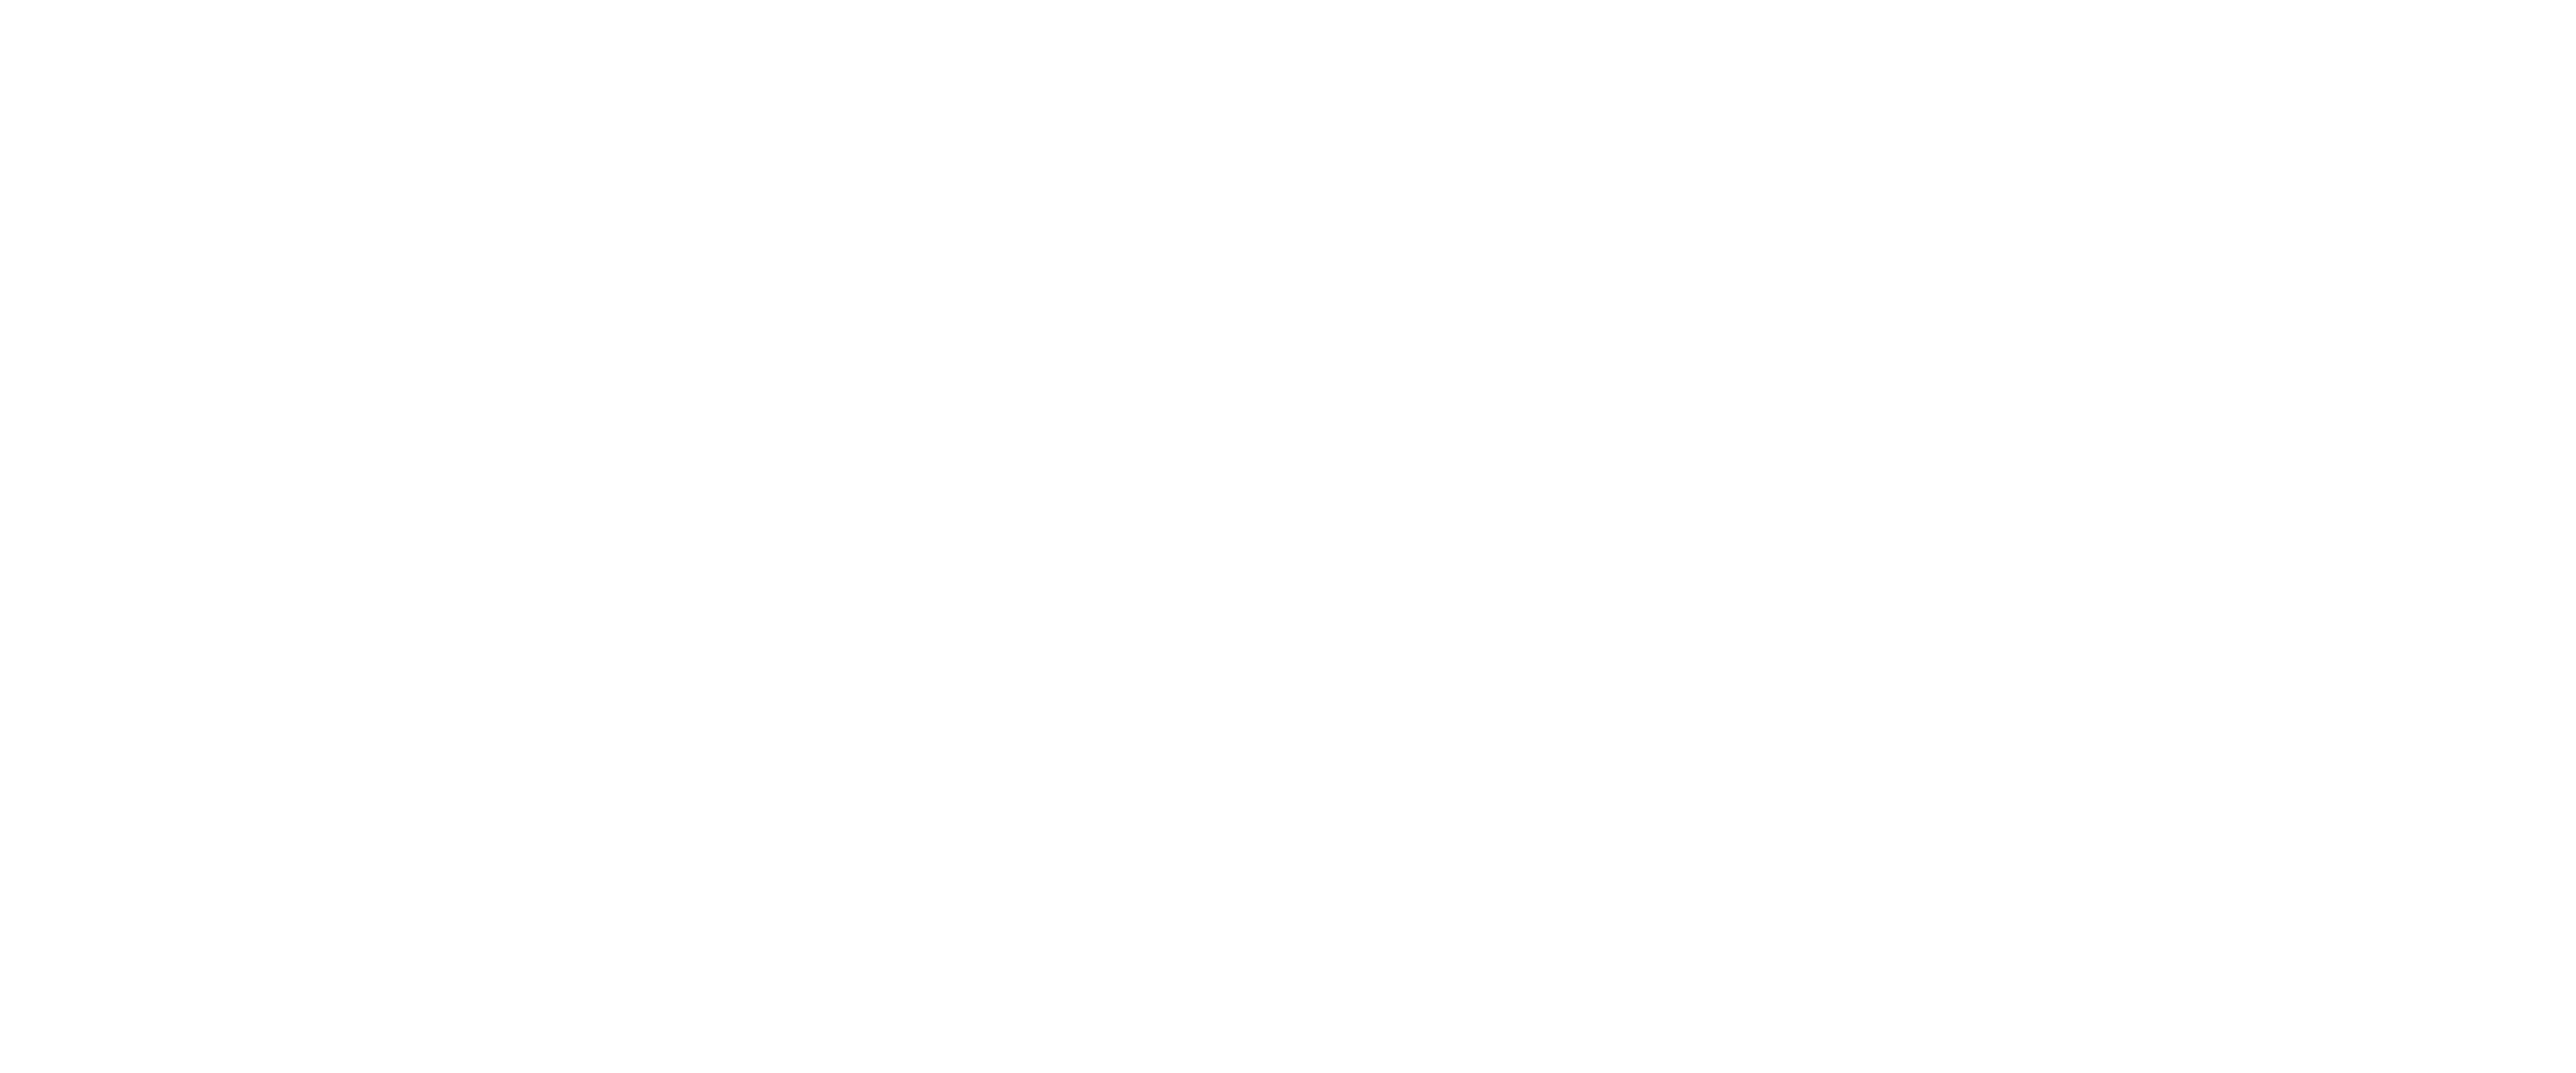 Tiktok Logo Cmyk Horizontal White Simplified 50 2 It Gets Better